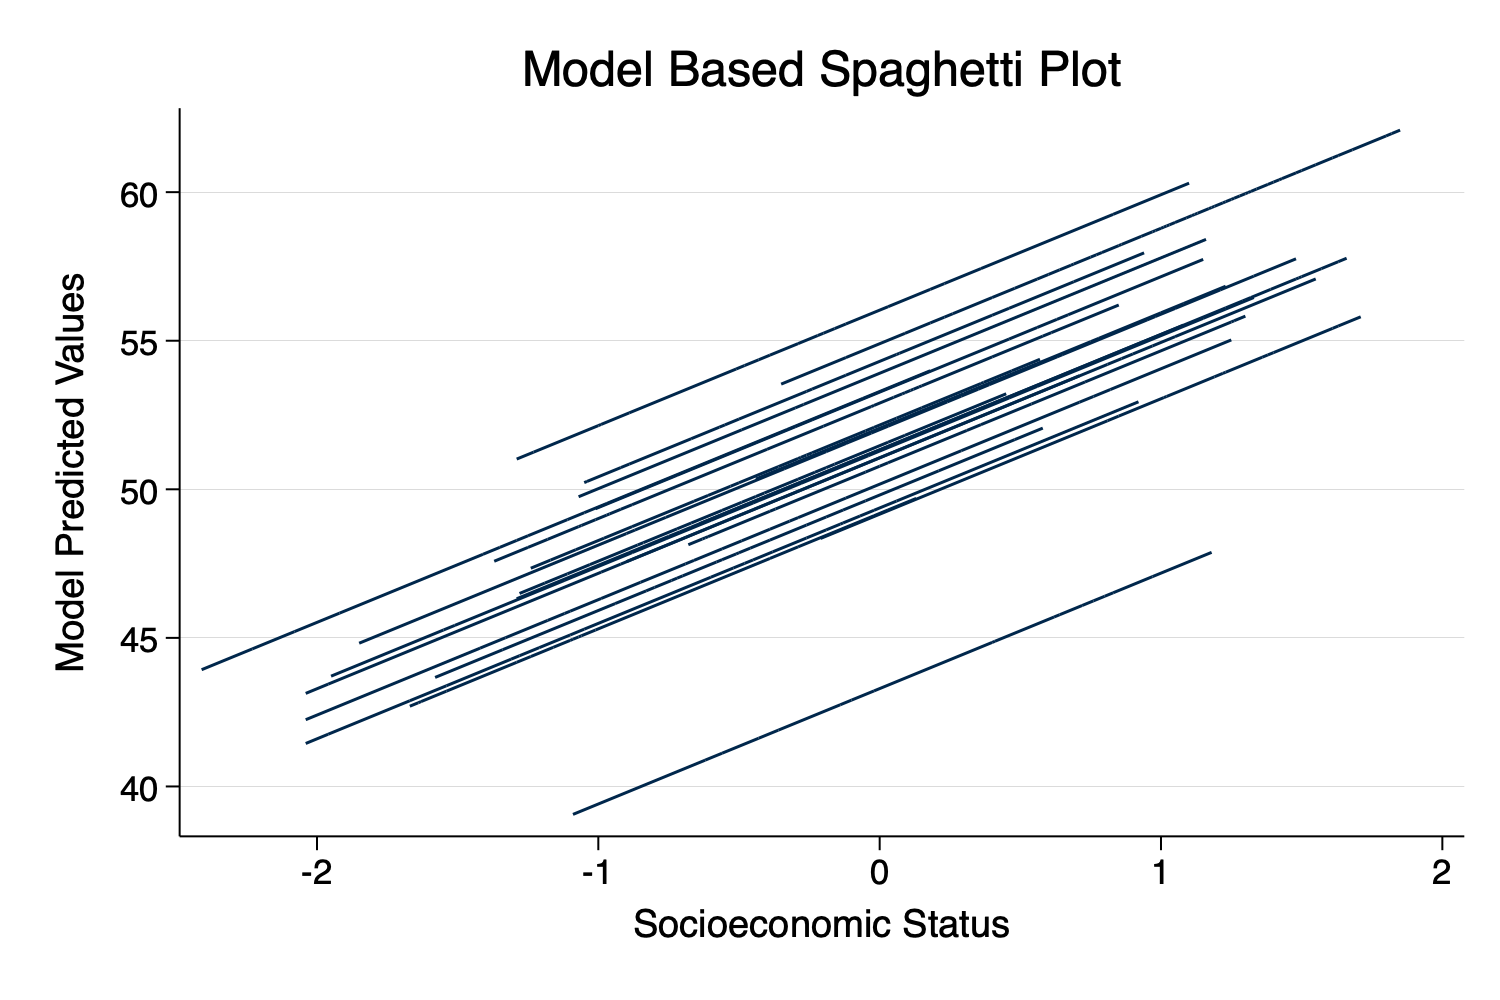 Finalized “Model Based” Spaghetti Plot